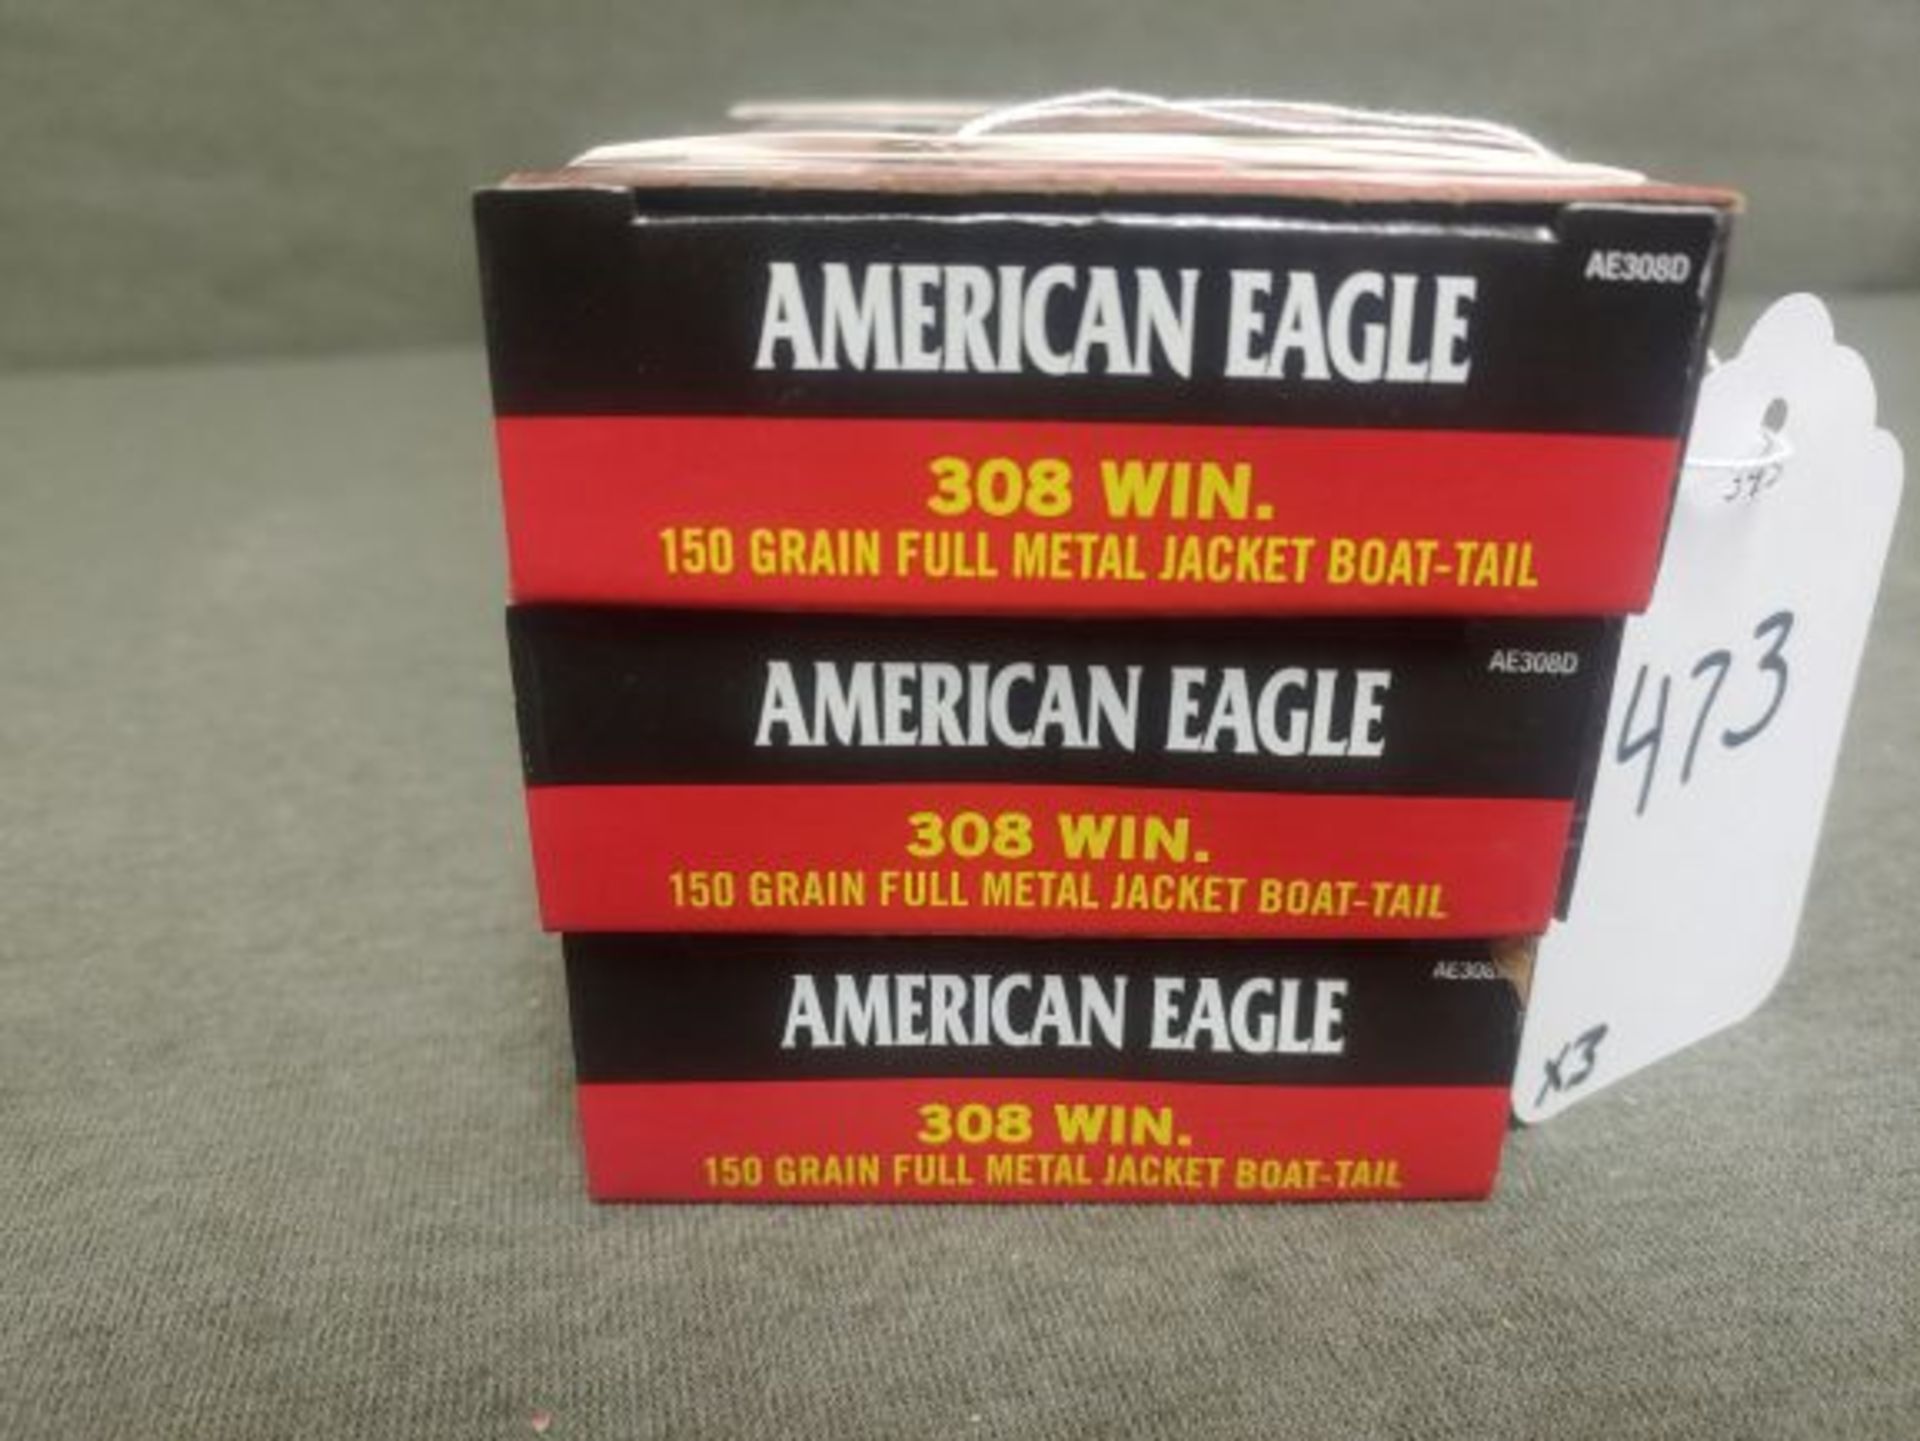 473. Am. Eagle .3 108 Win 150gr. FMJBT, 20 Rnd. Boxes (3x the Money) - Image 2 of 2